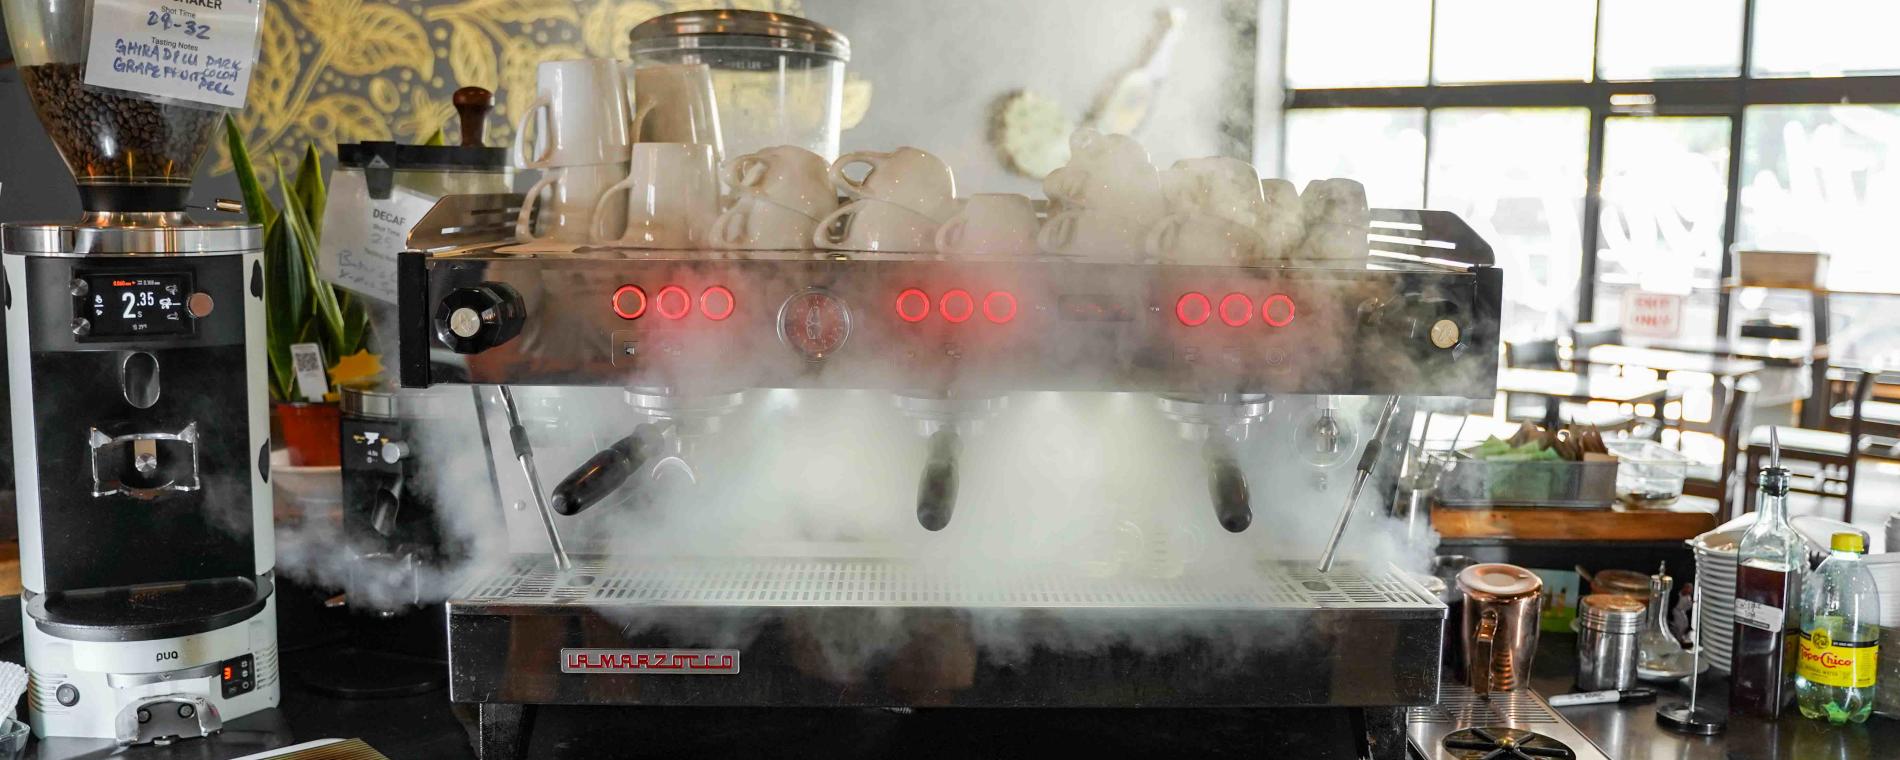 Espresso Machine Steam